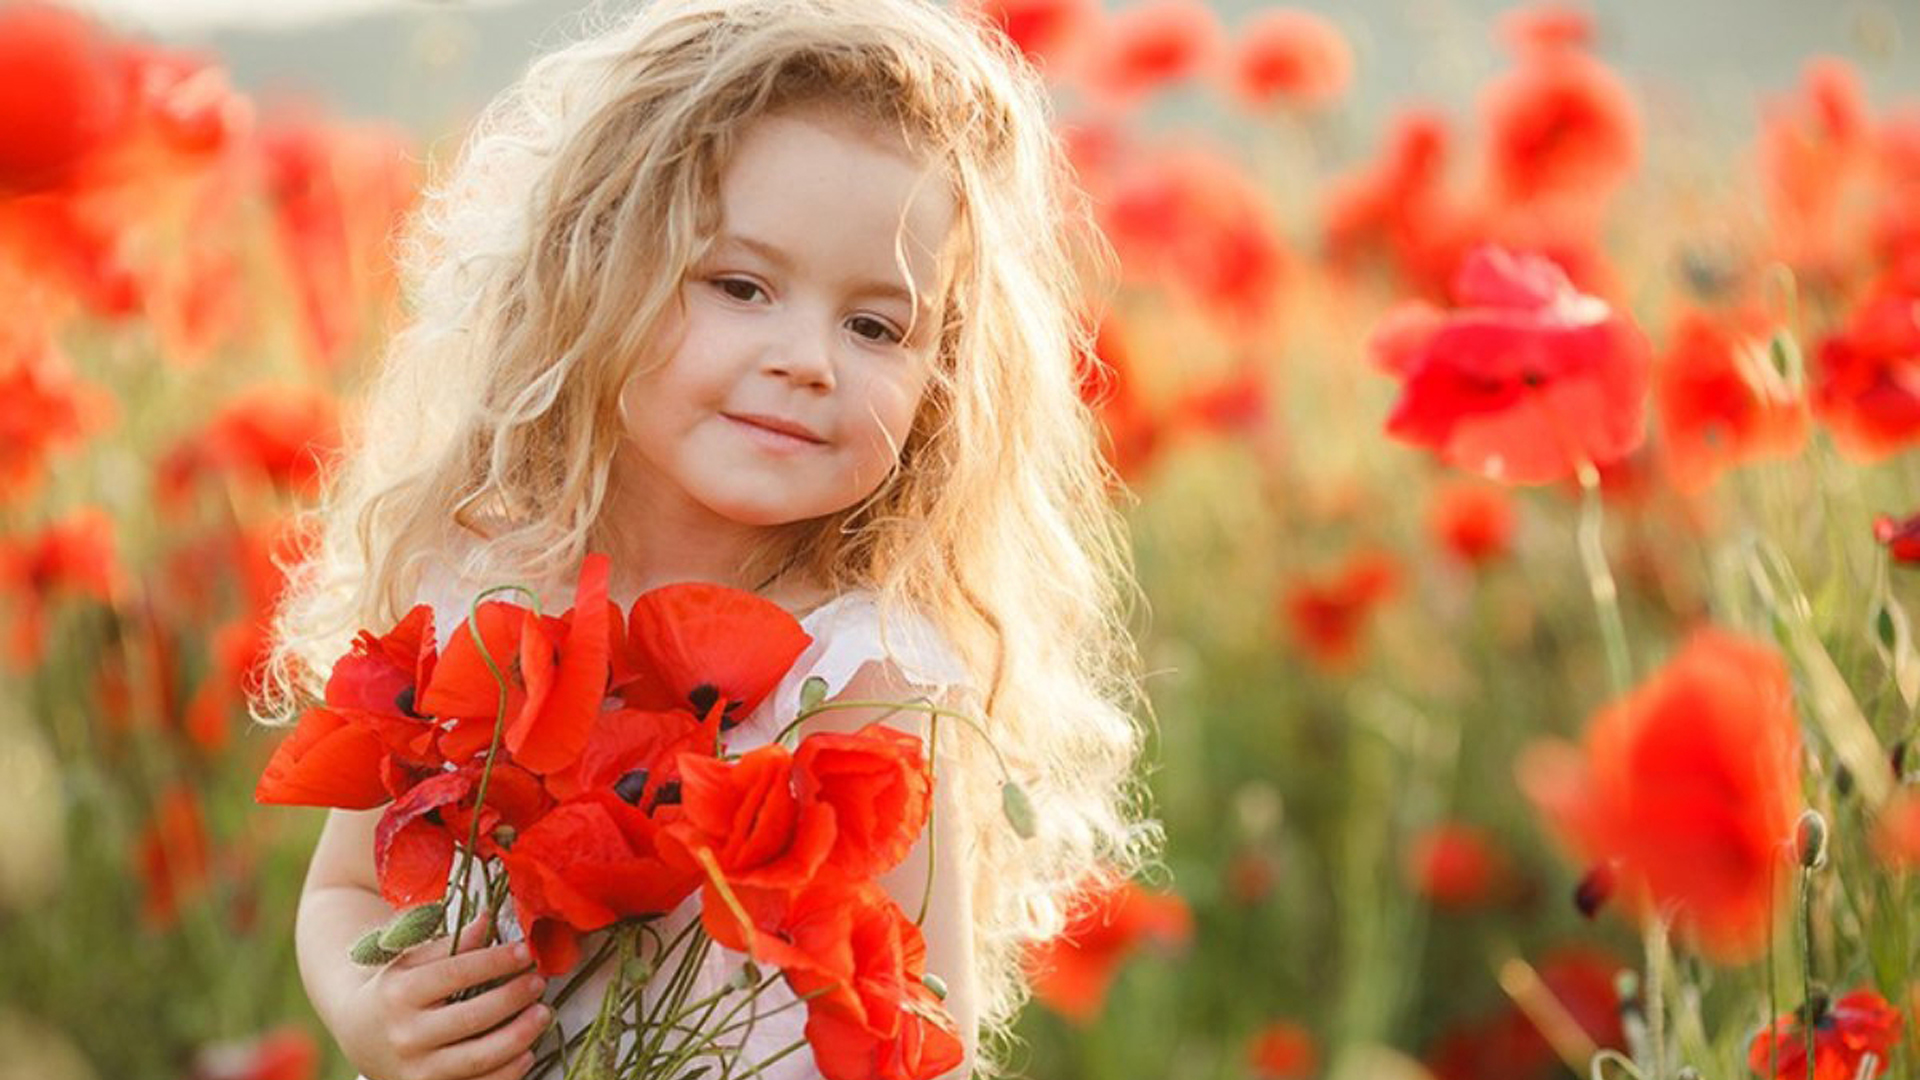 Little Girl With Red Poppy Flowers Standing In Blur Red Poppy Flowers Field Wearing White Dress HD